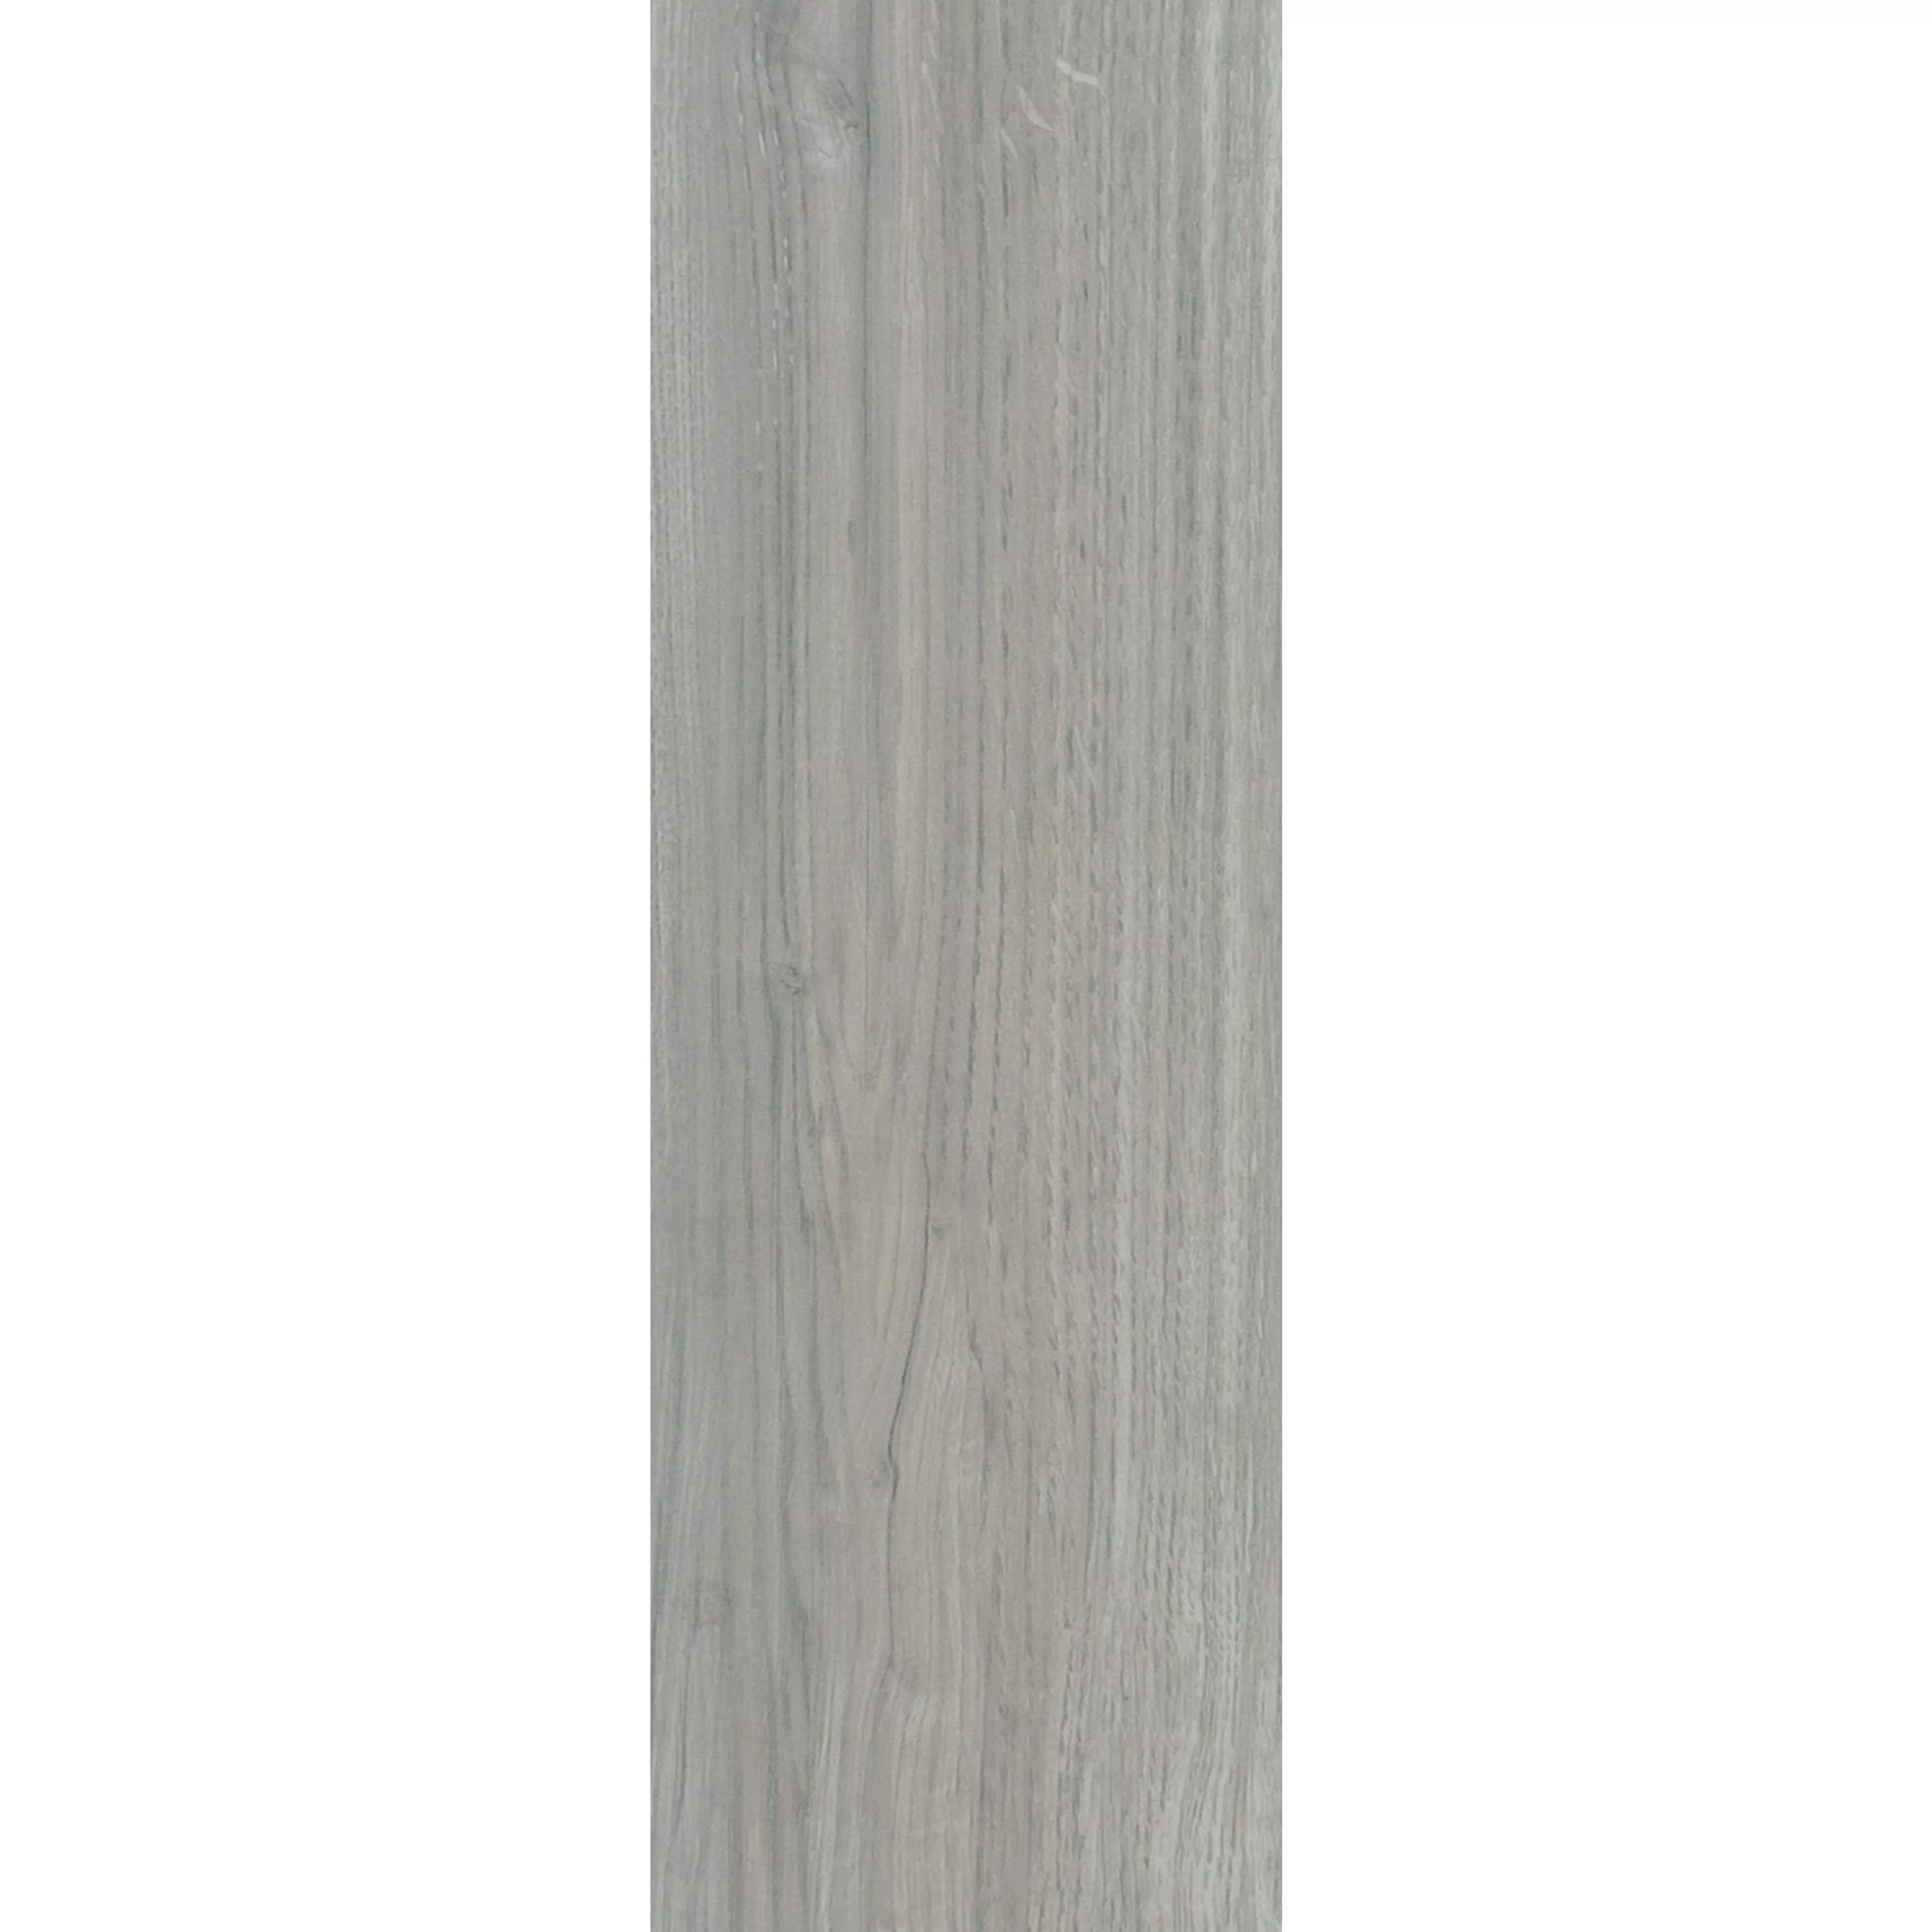 Klinker Träimitation Fullwood Beige 20x120cm 